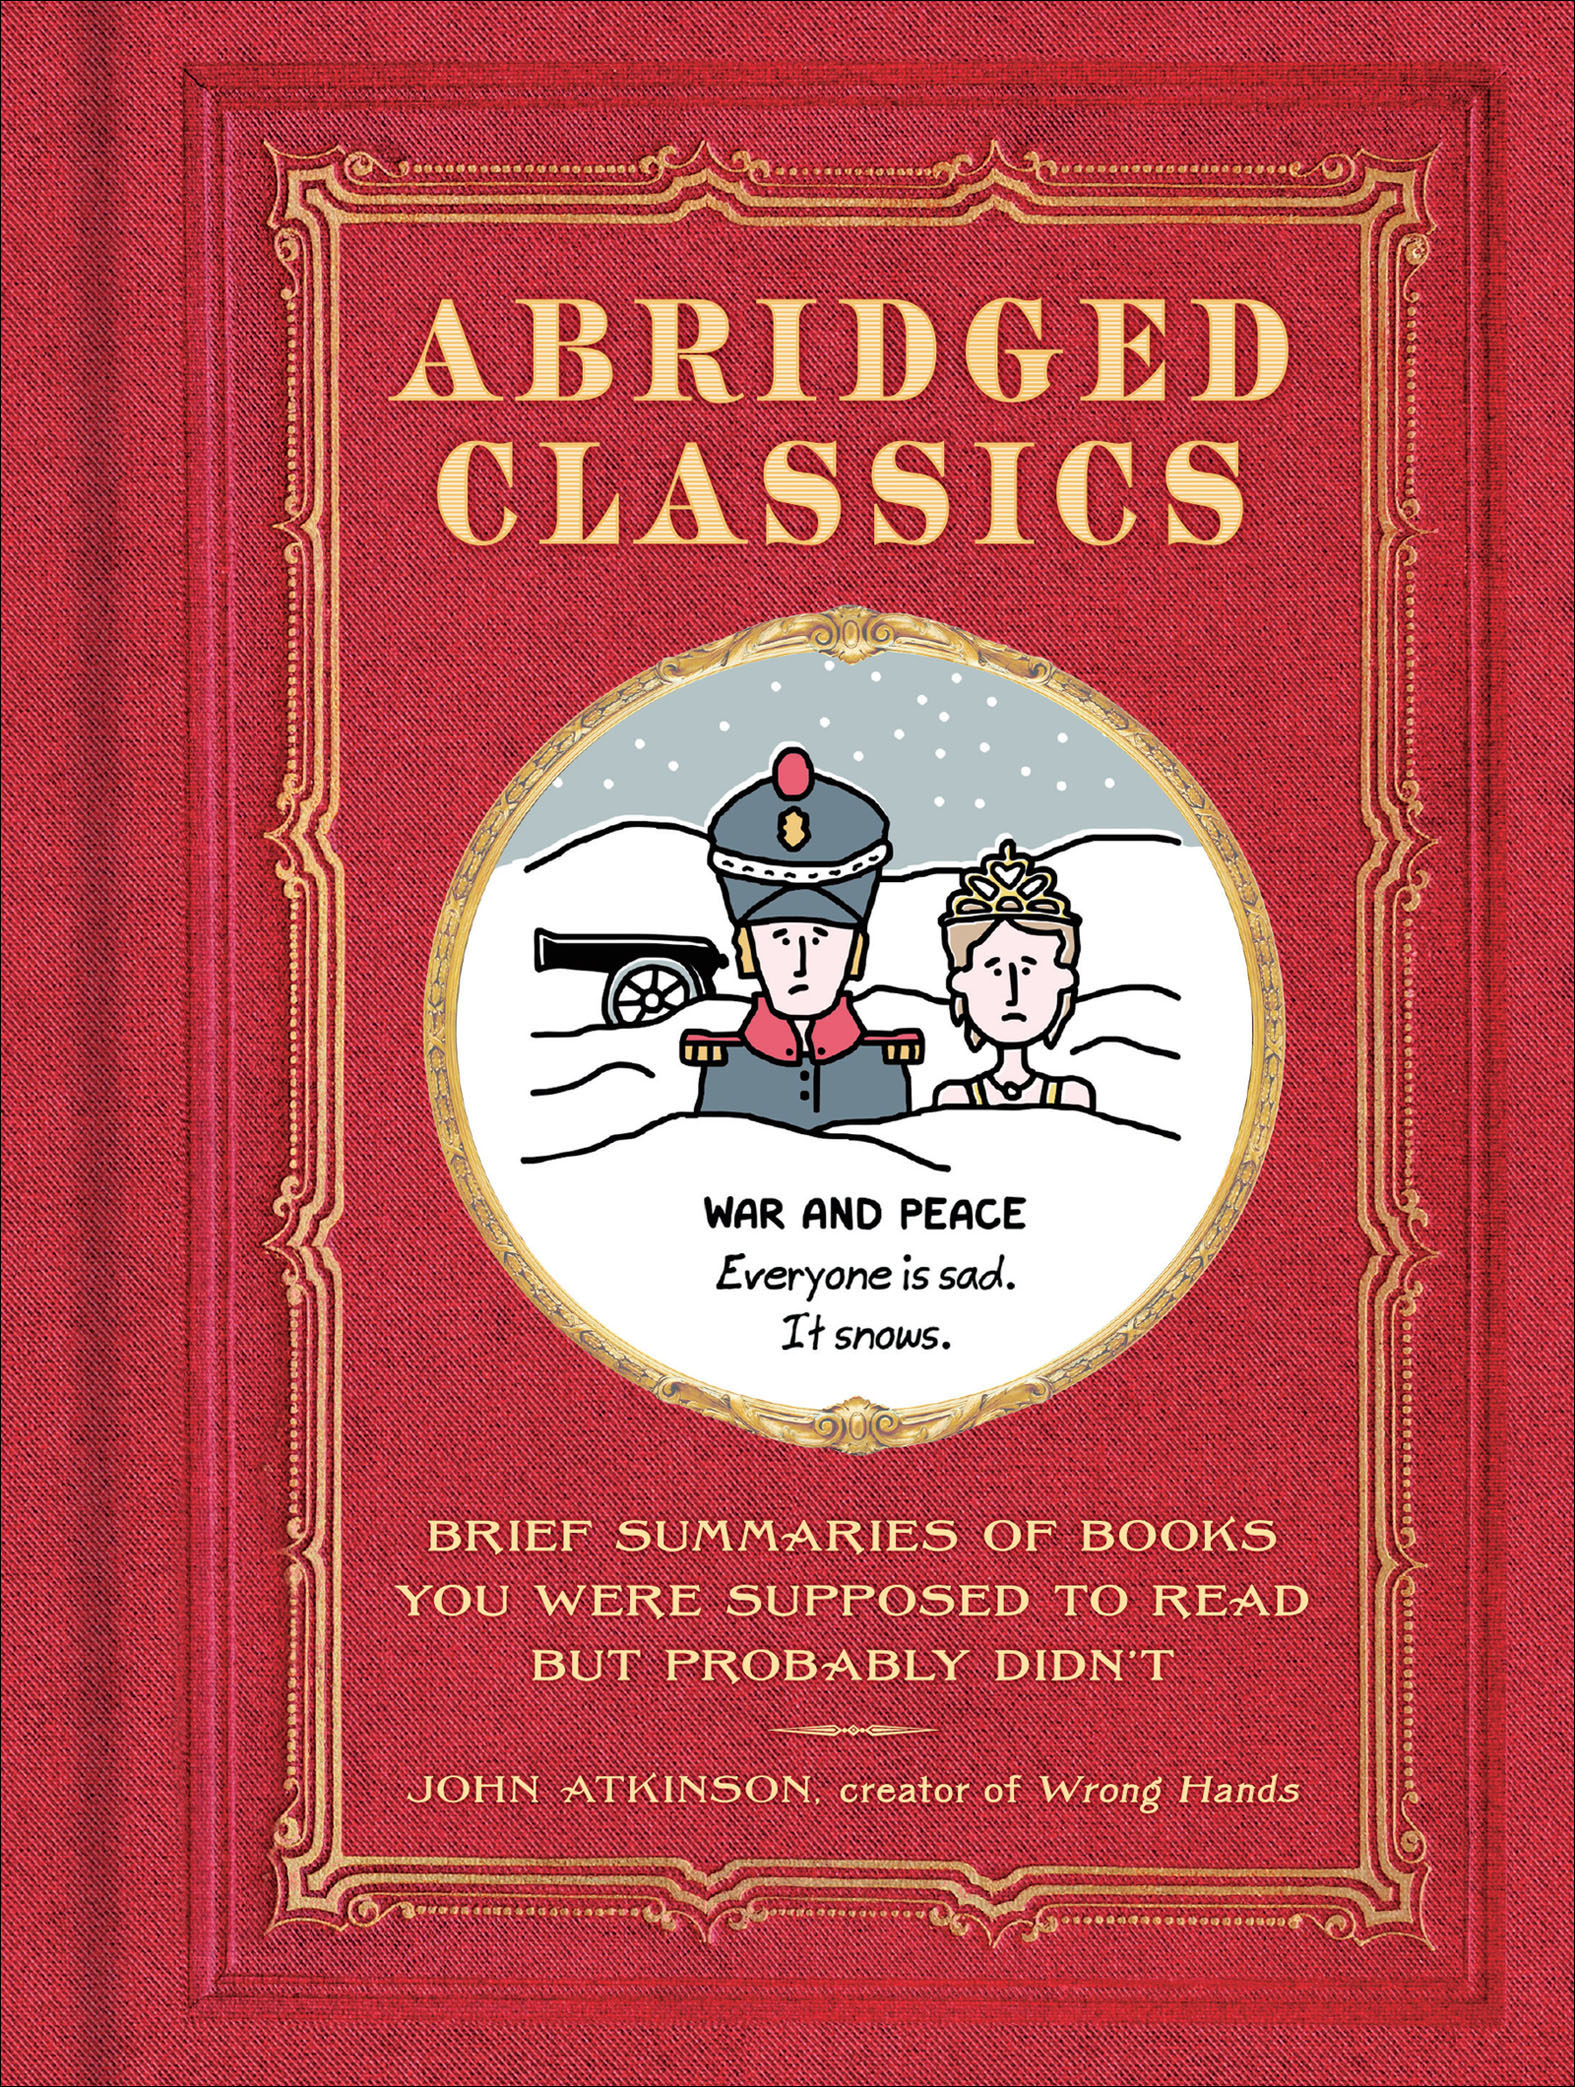 Abridged Classics cover image